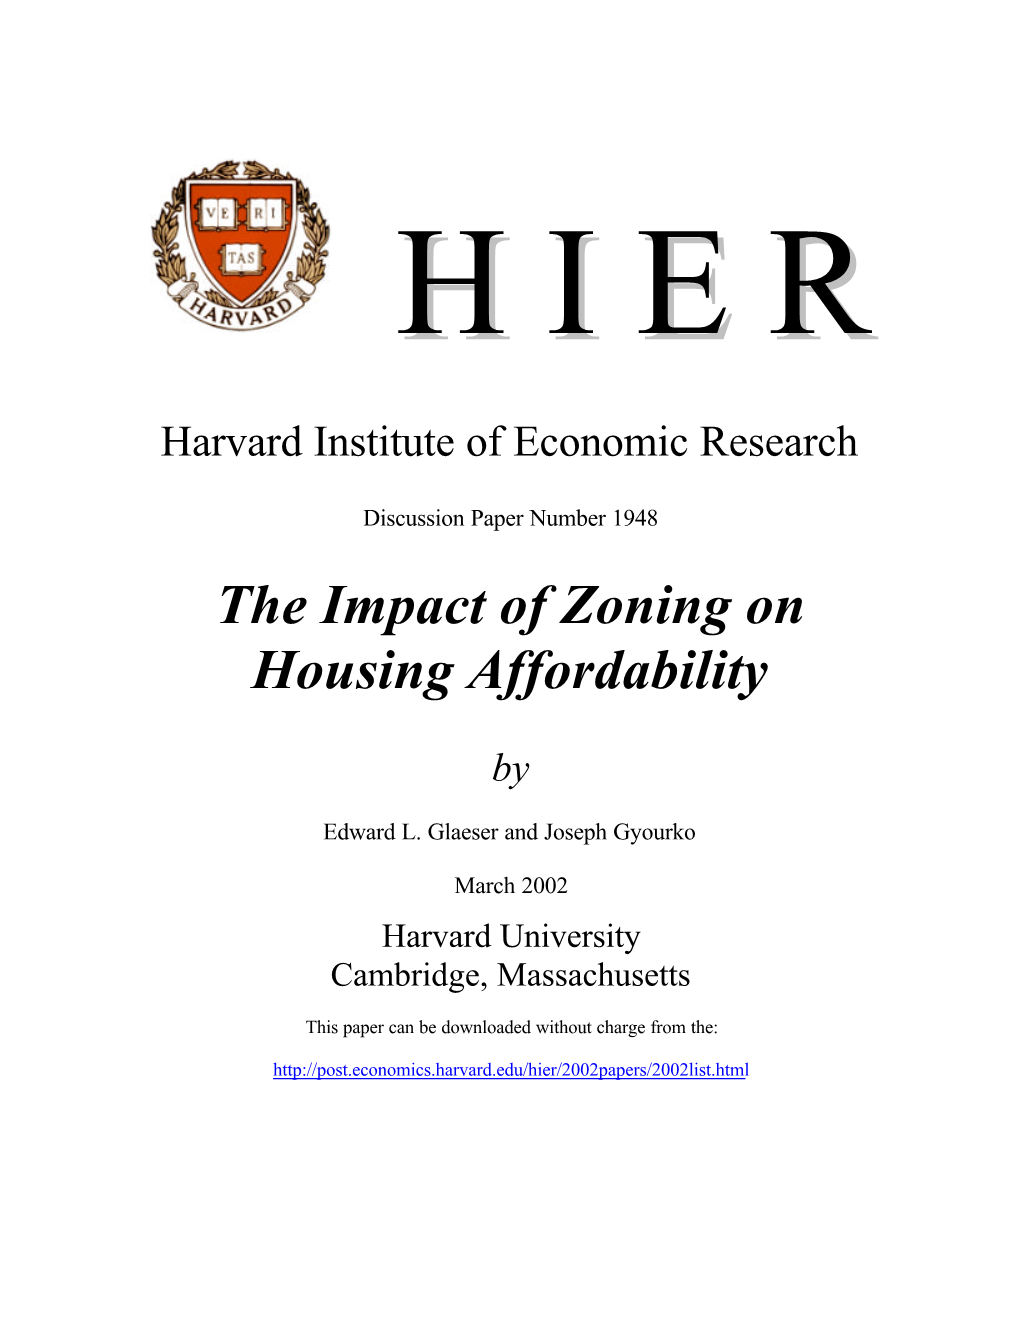 The Impact of Zoning on Housing Affordability